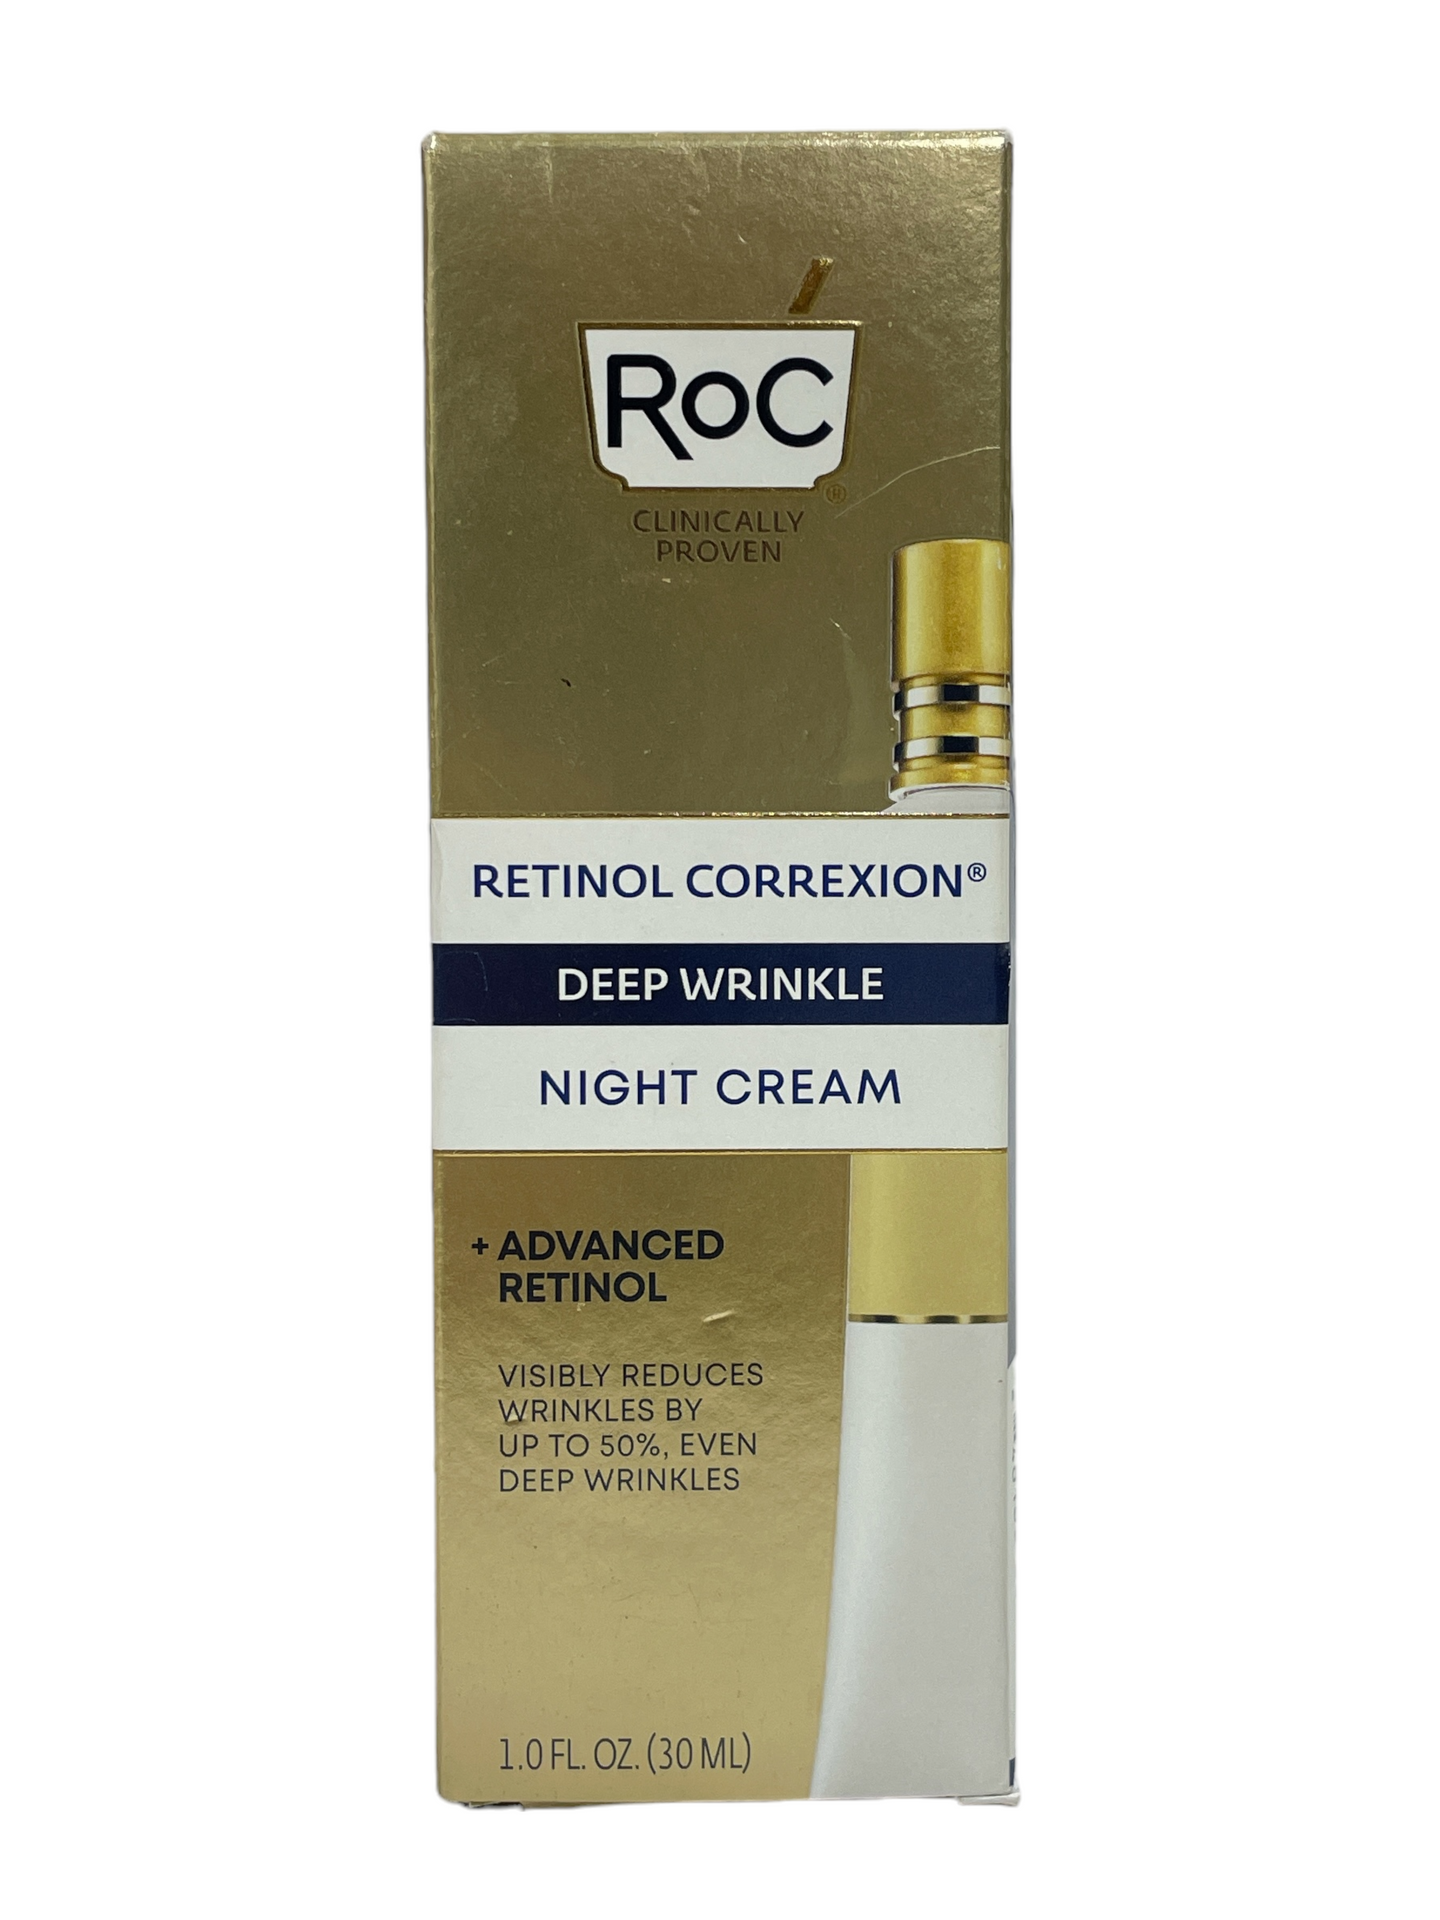 ROC Retinol Correction Deep Wrinkle Night Cream (1.0fl.oz / 30ml)